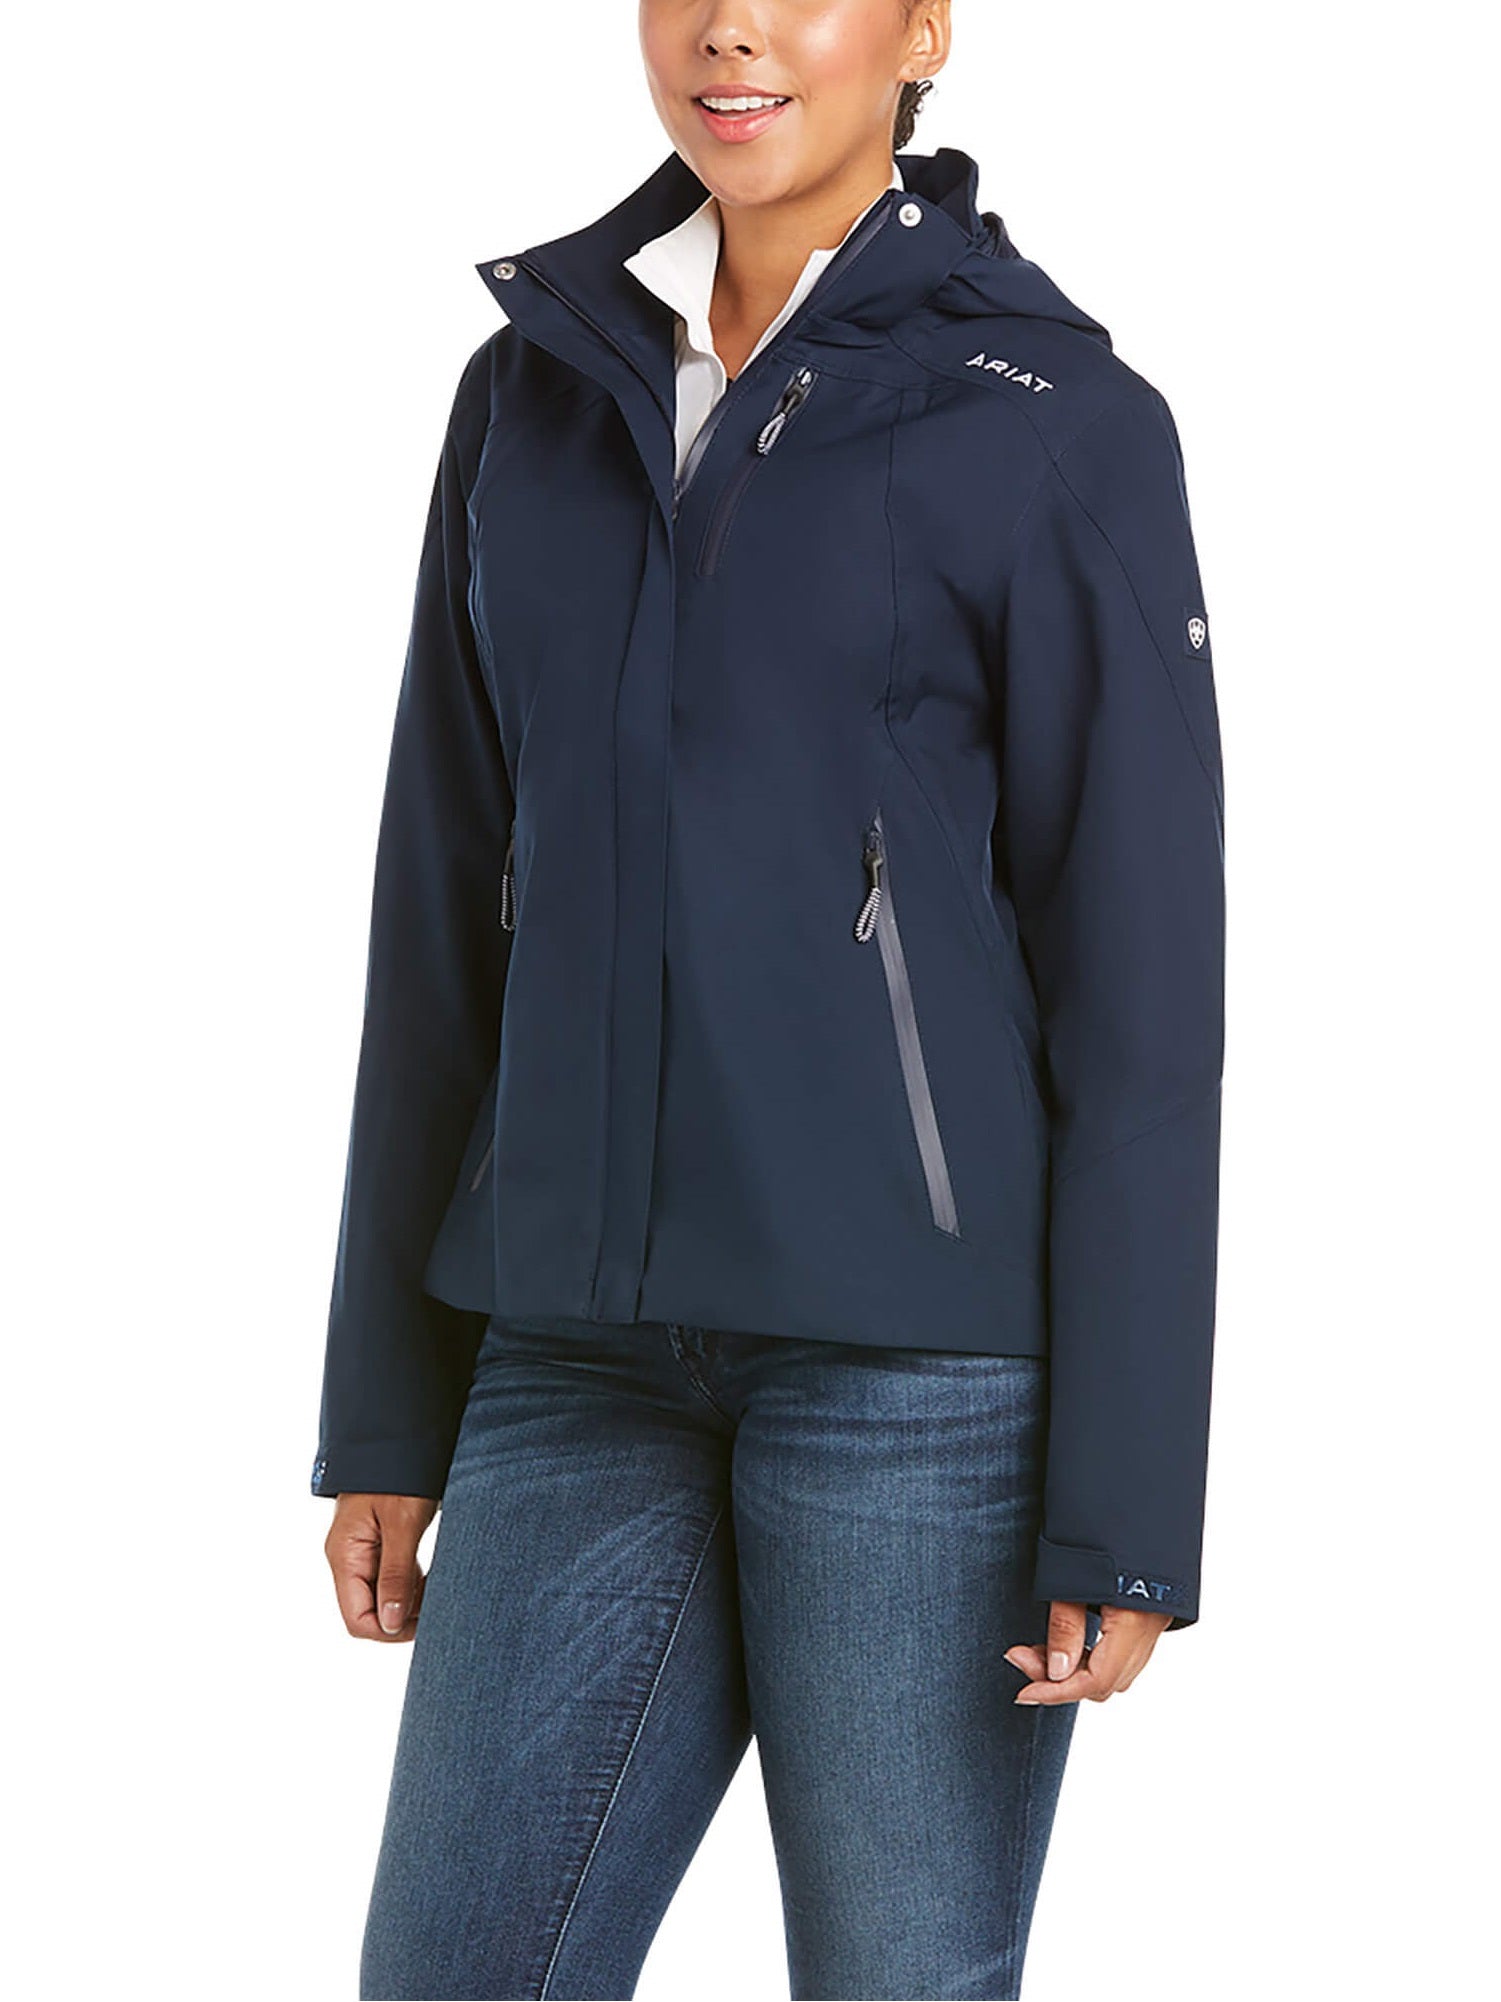 40% OFF ARIAT Women's Coastal Waterproof Jacket - Navy - Size Large